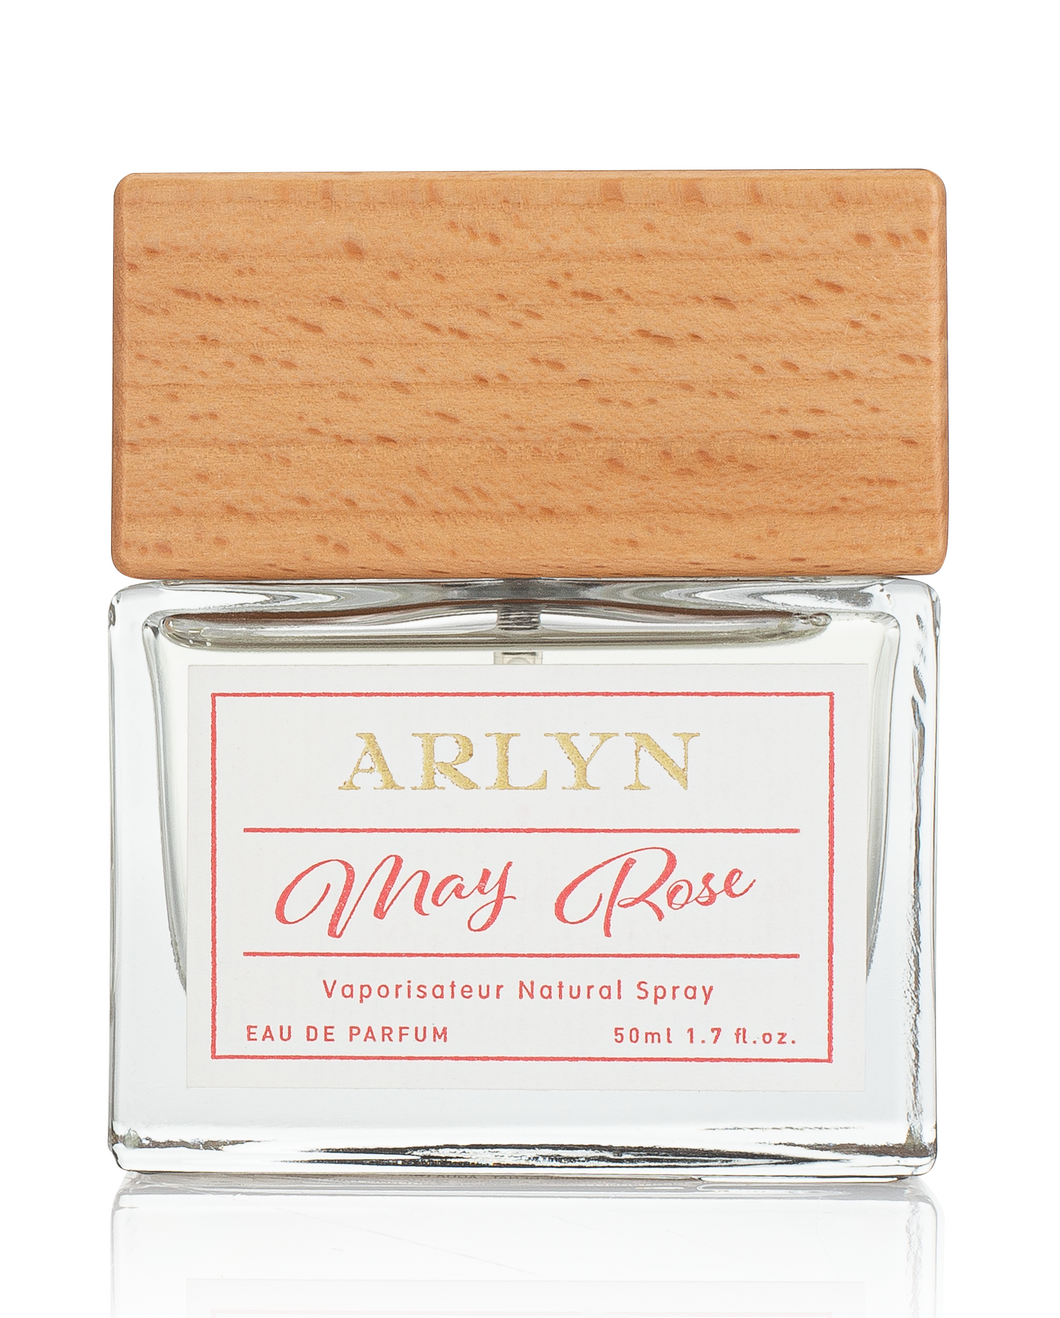 may rose arlyn eau de parfum 1.7oz for womans - alwaysspecialgifts.com